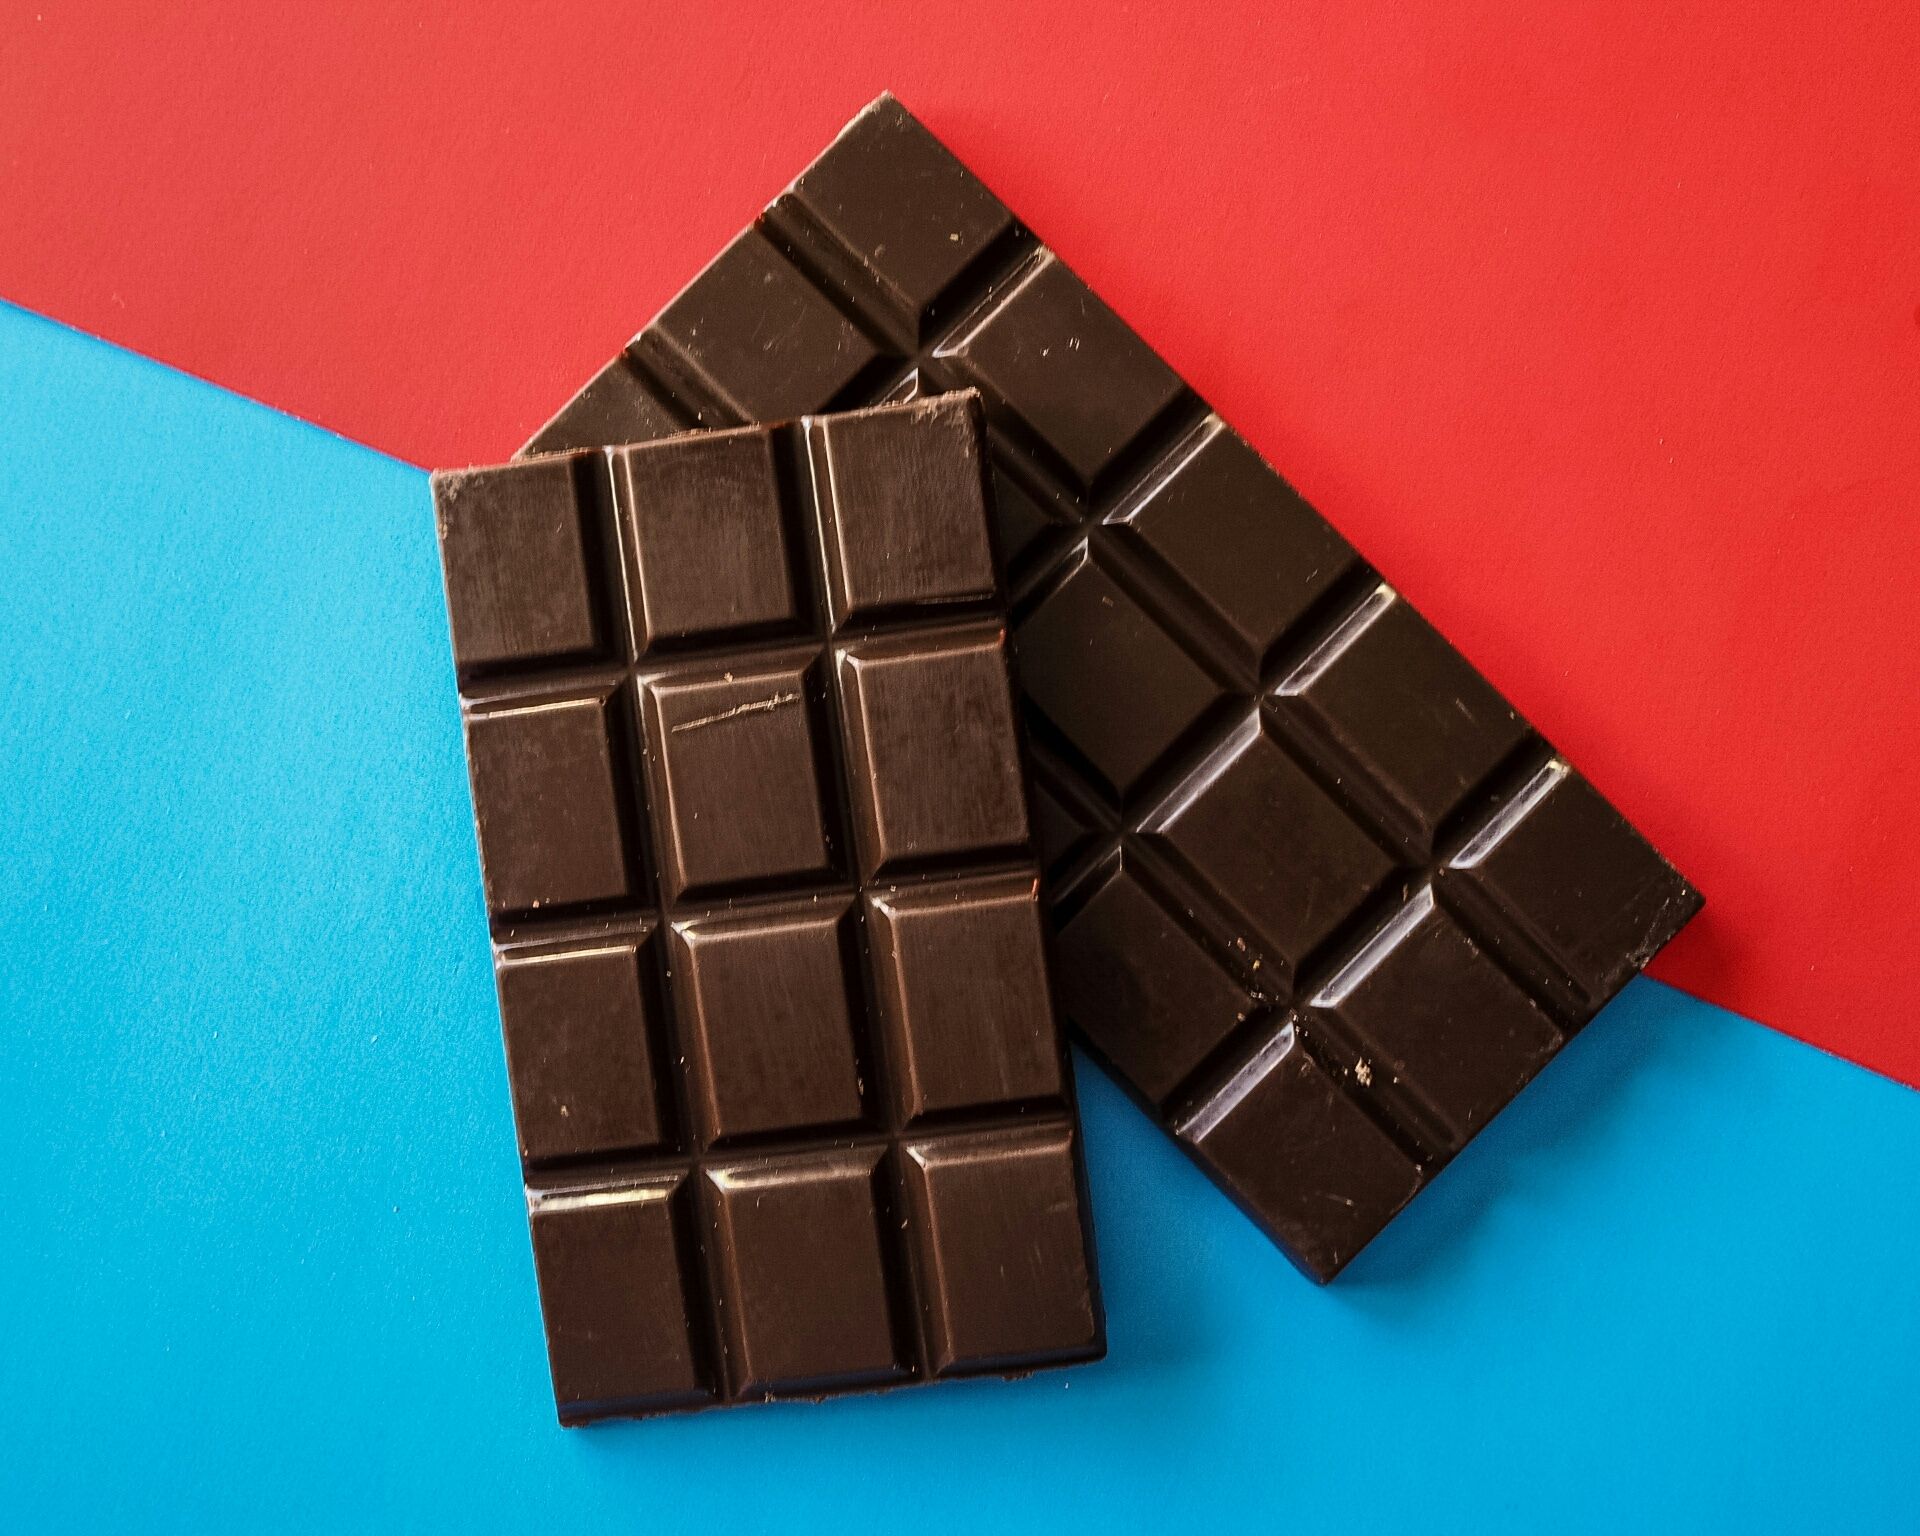 Dark Chocolate Benefits - 4 Reasons Dark Chocolate Is Good For You